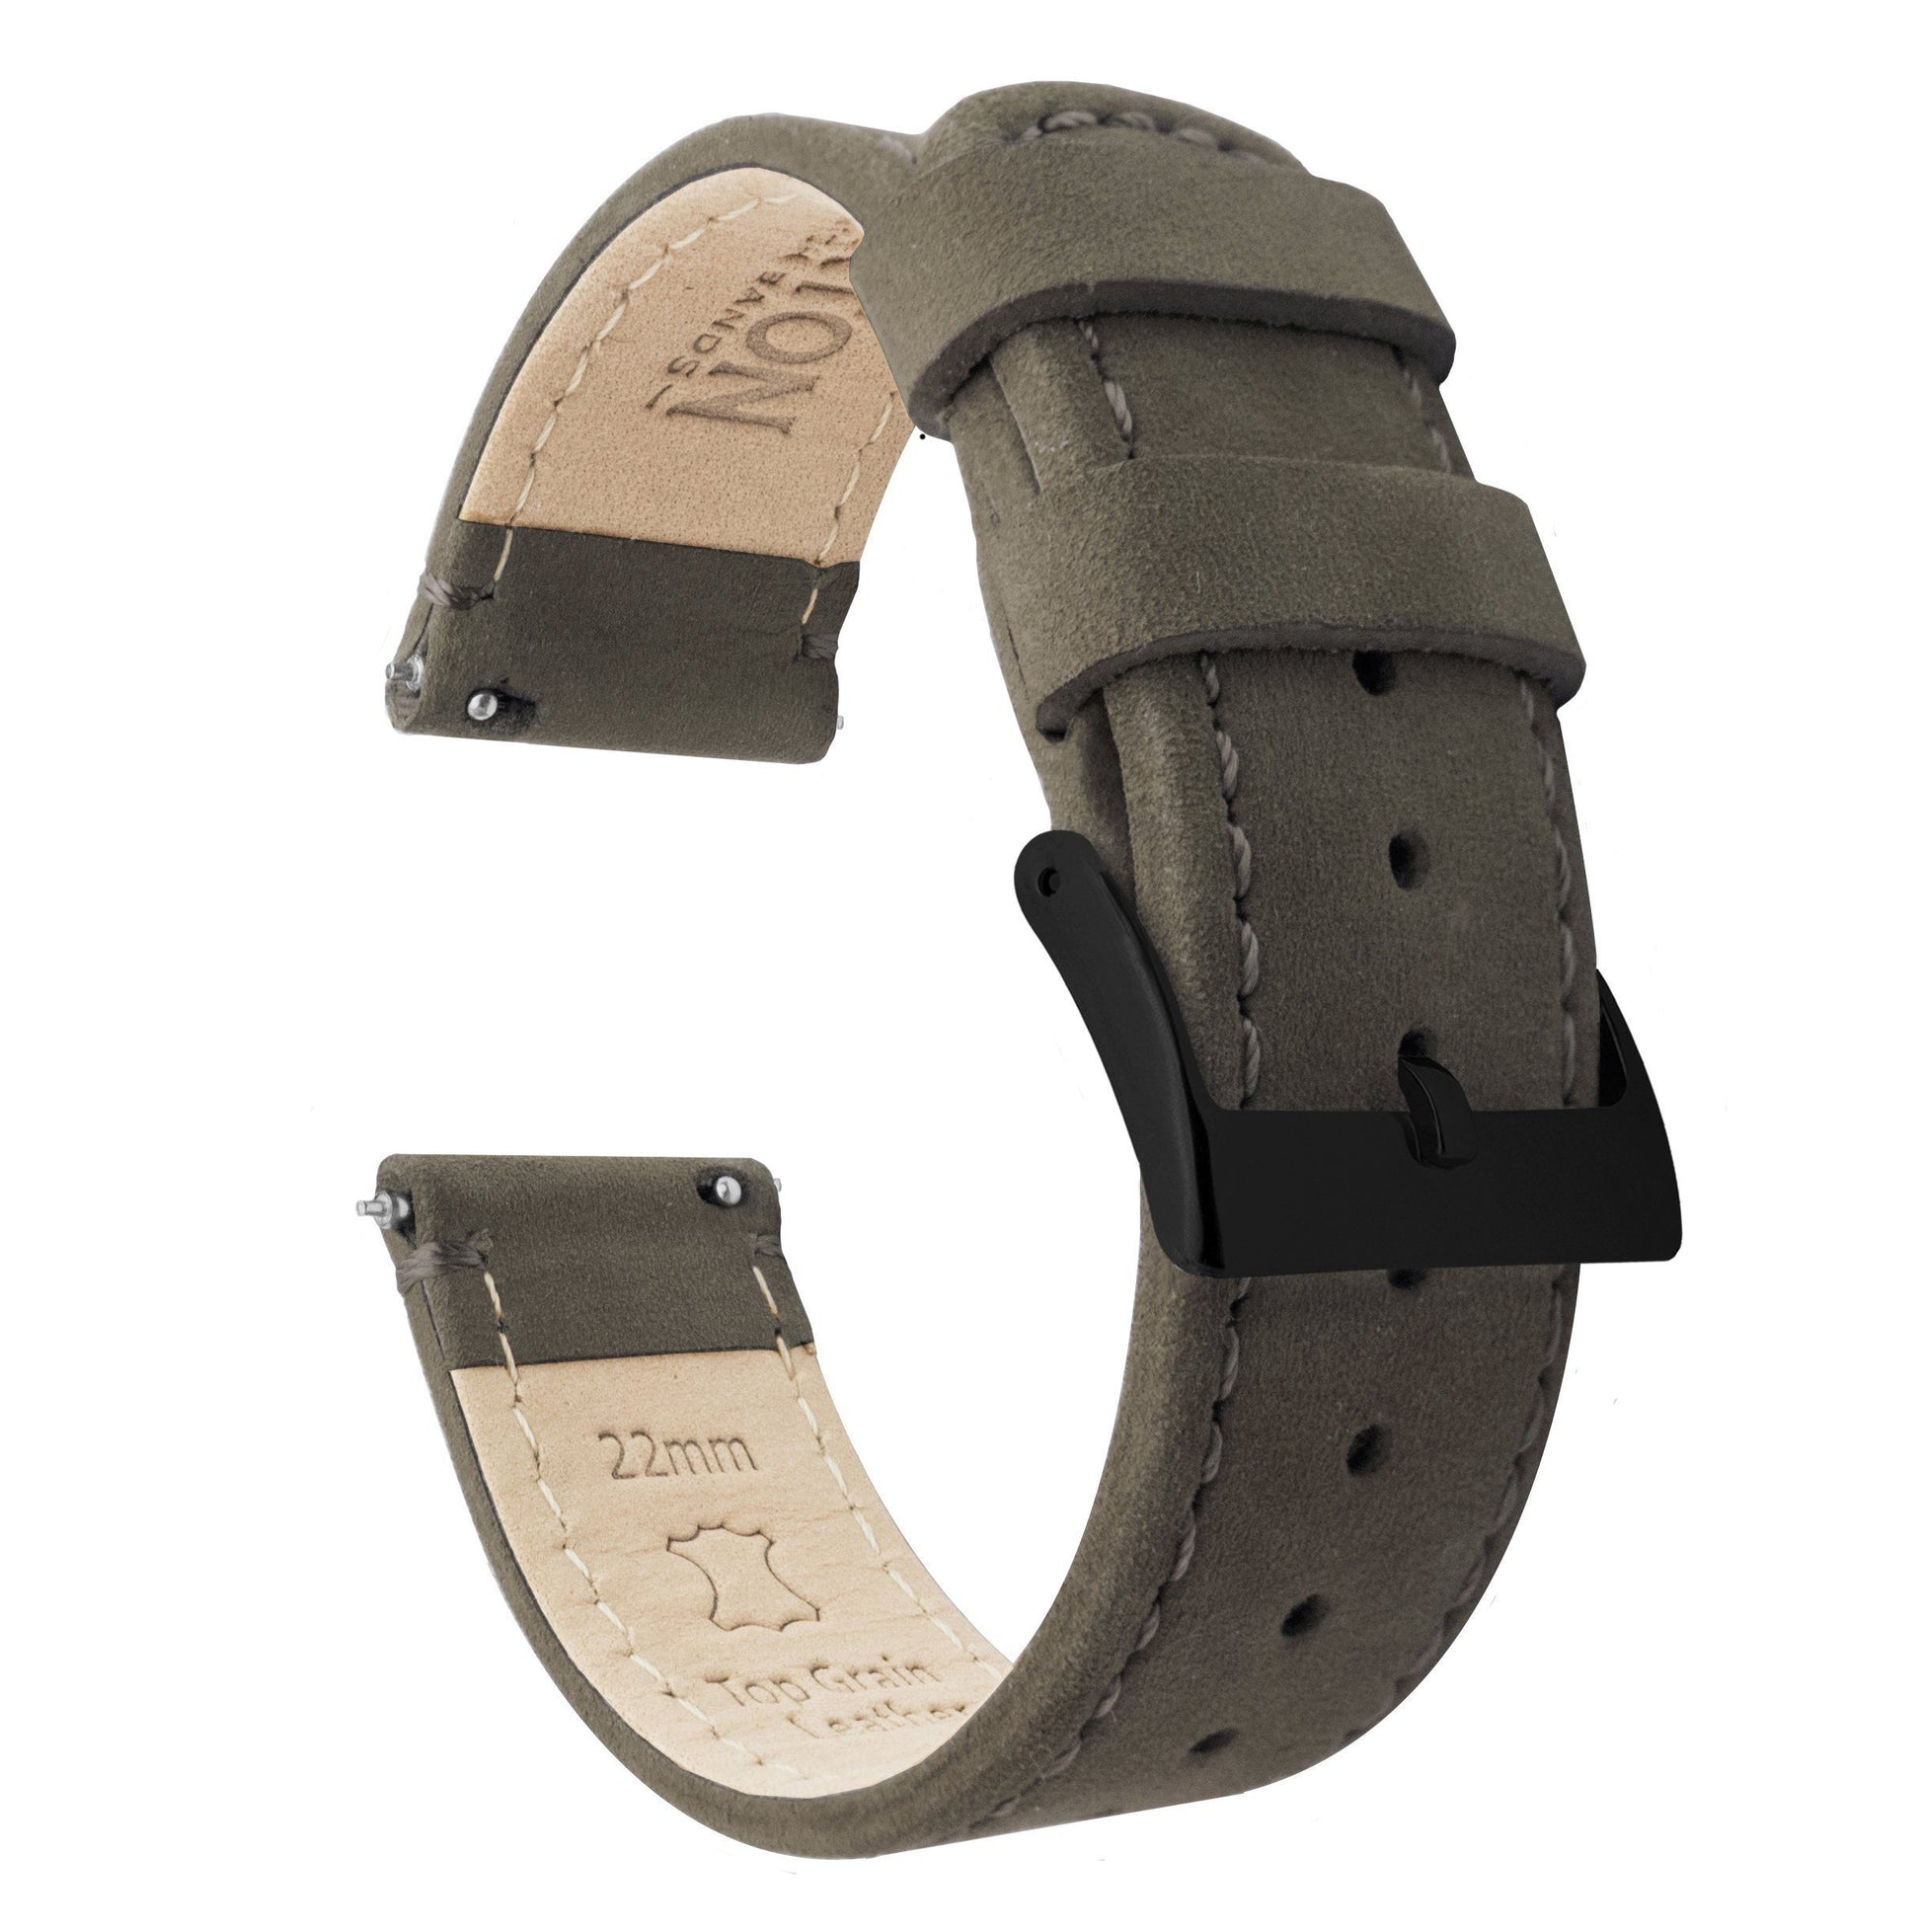 Samsung Galaxy Watch Active | Espresso Brown Leather & Stitching - Barton Watch Bands